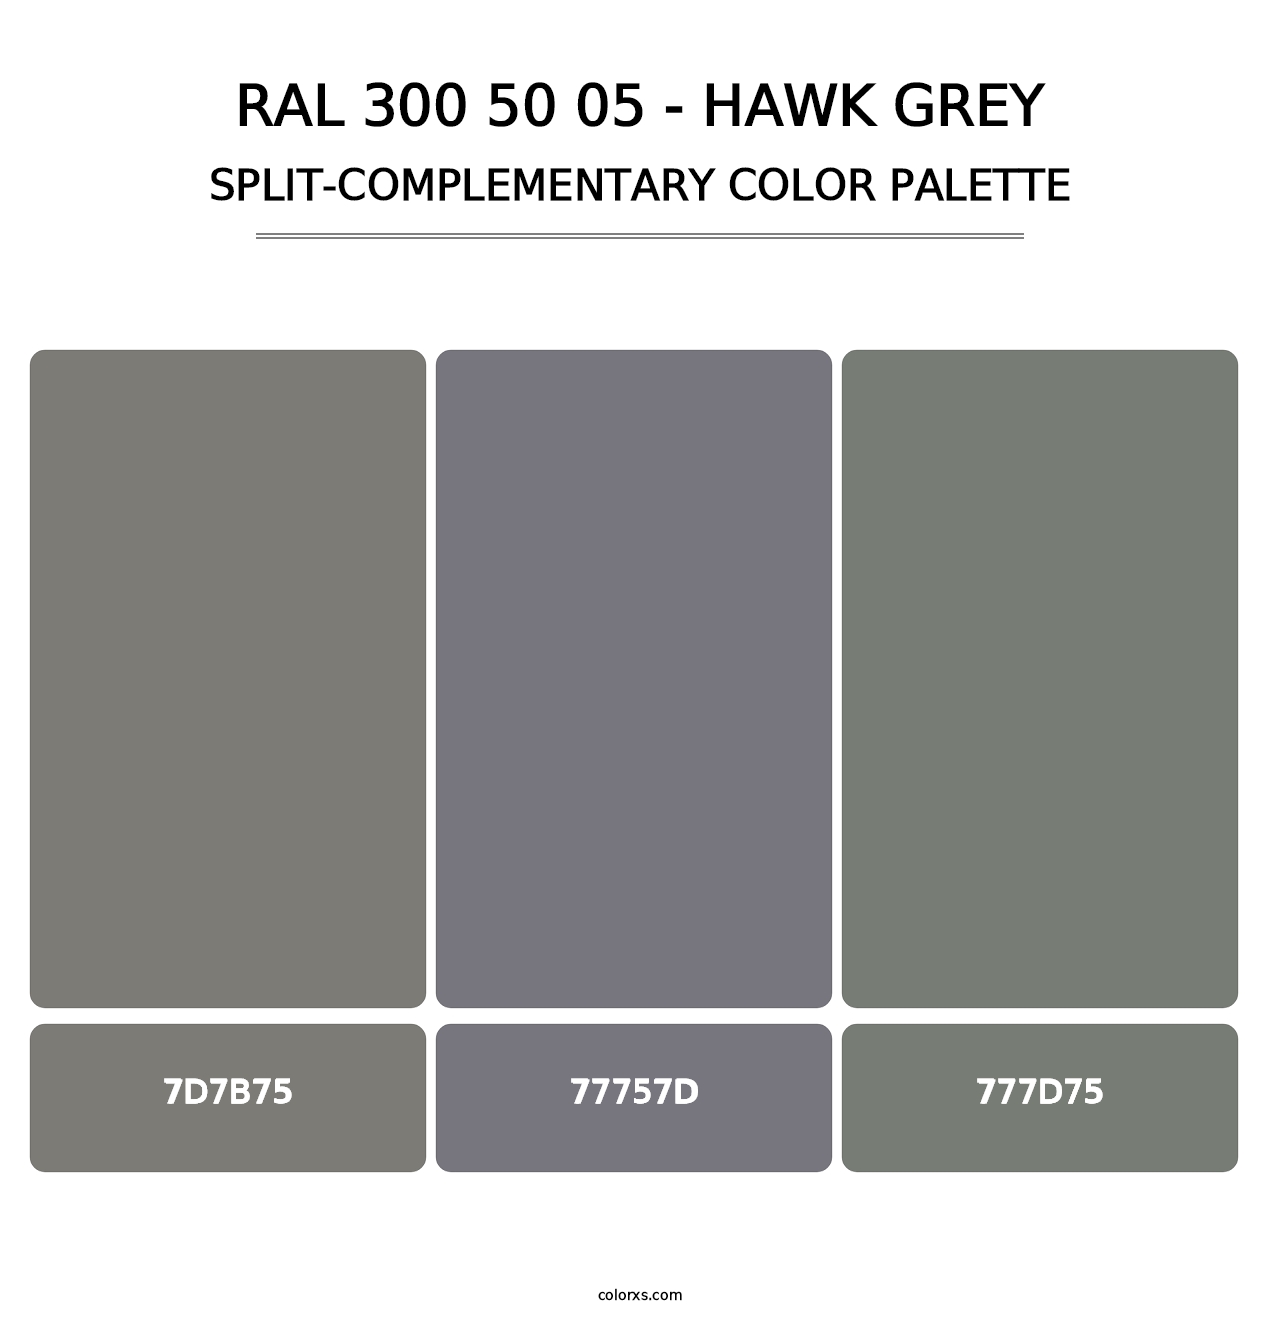 RAL 300 50 05 - Hawk Grey - Split-Complementary Color Palette